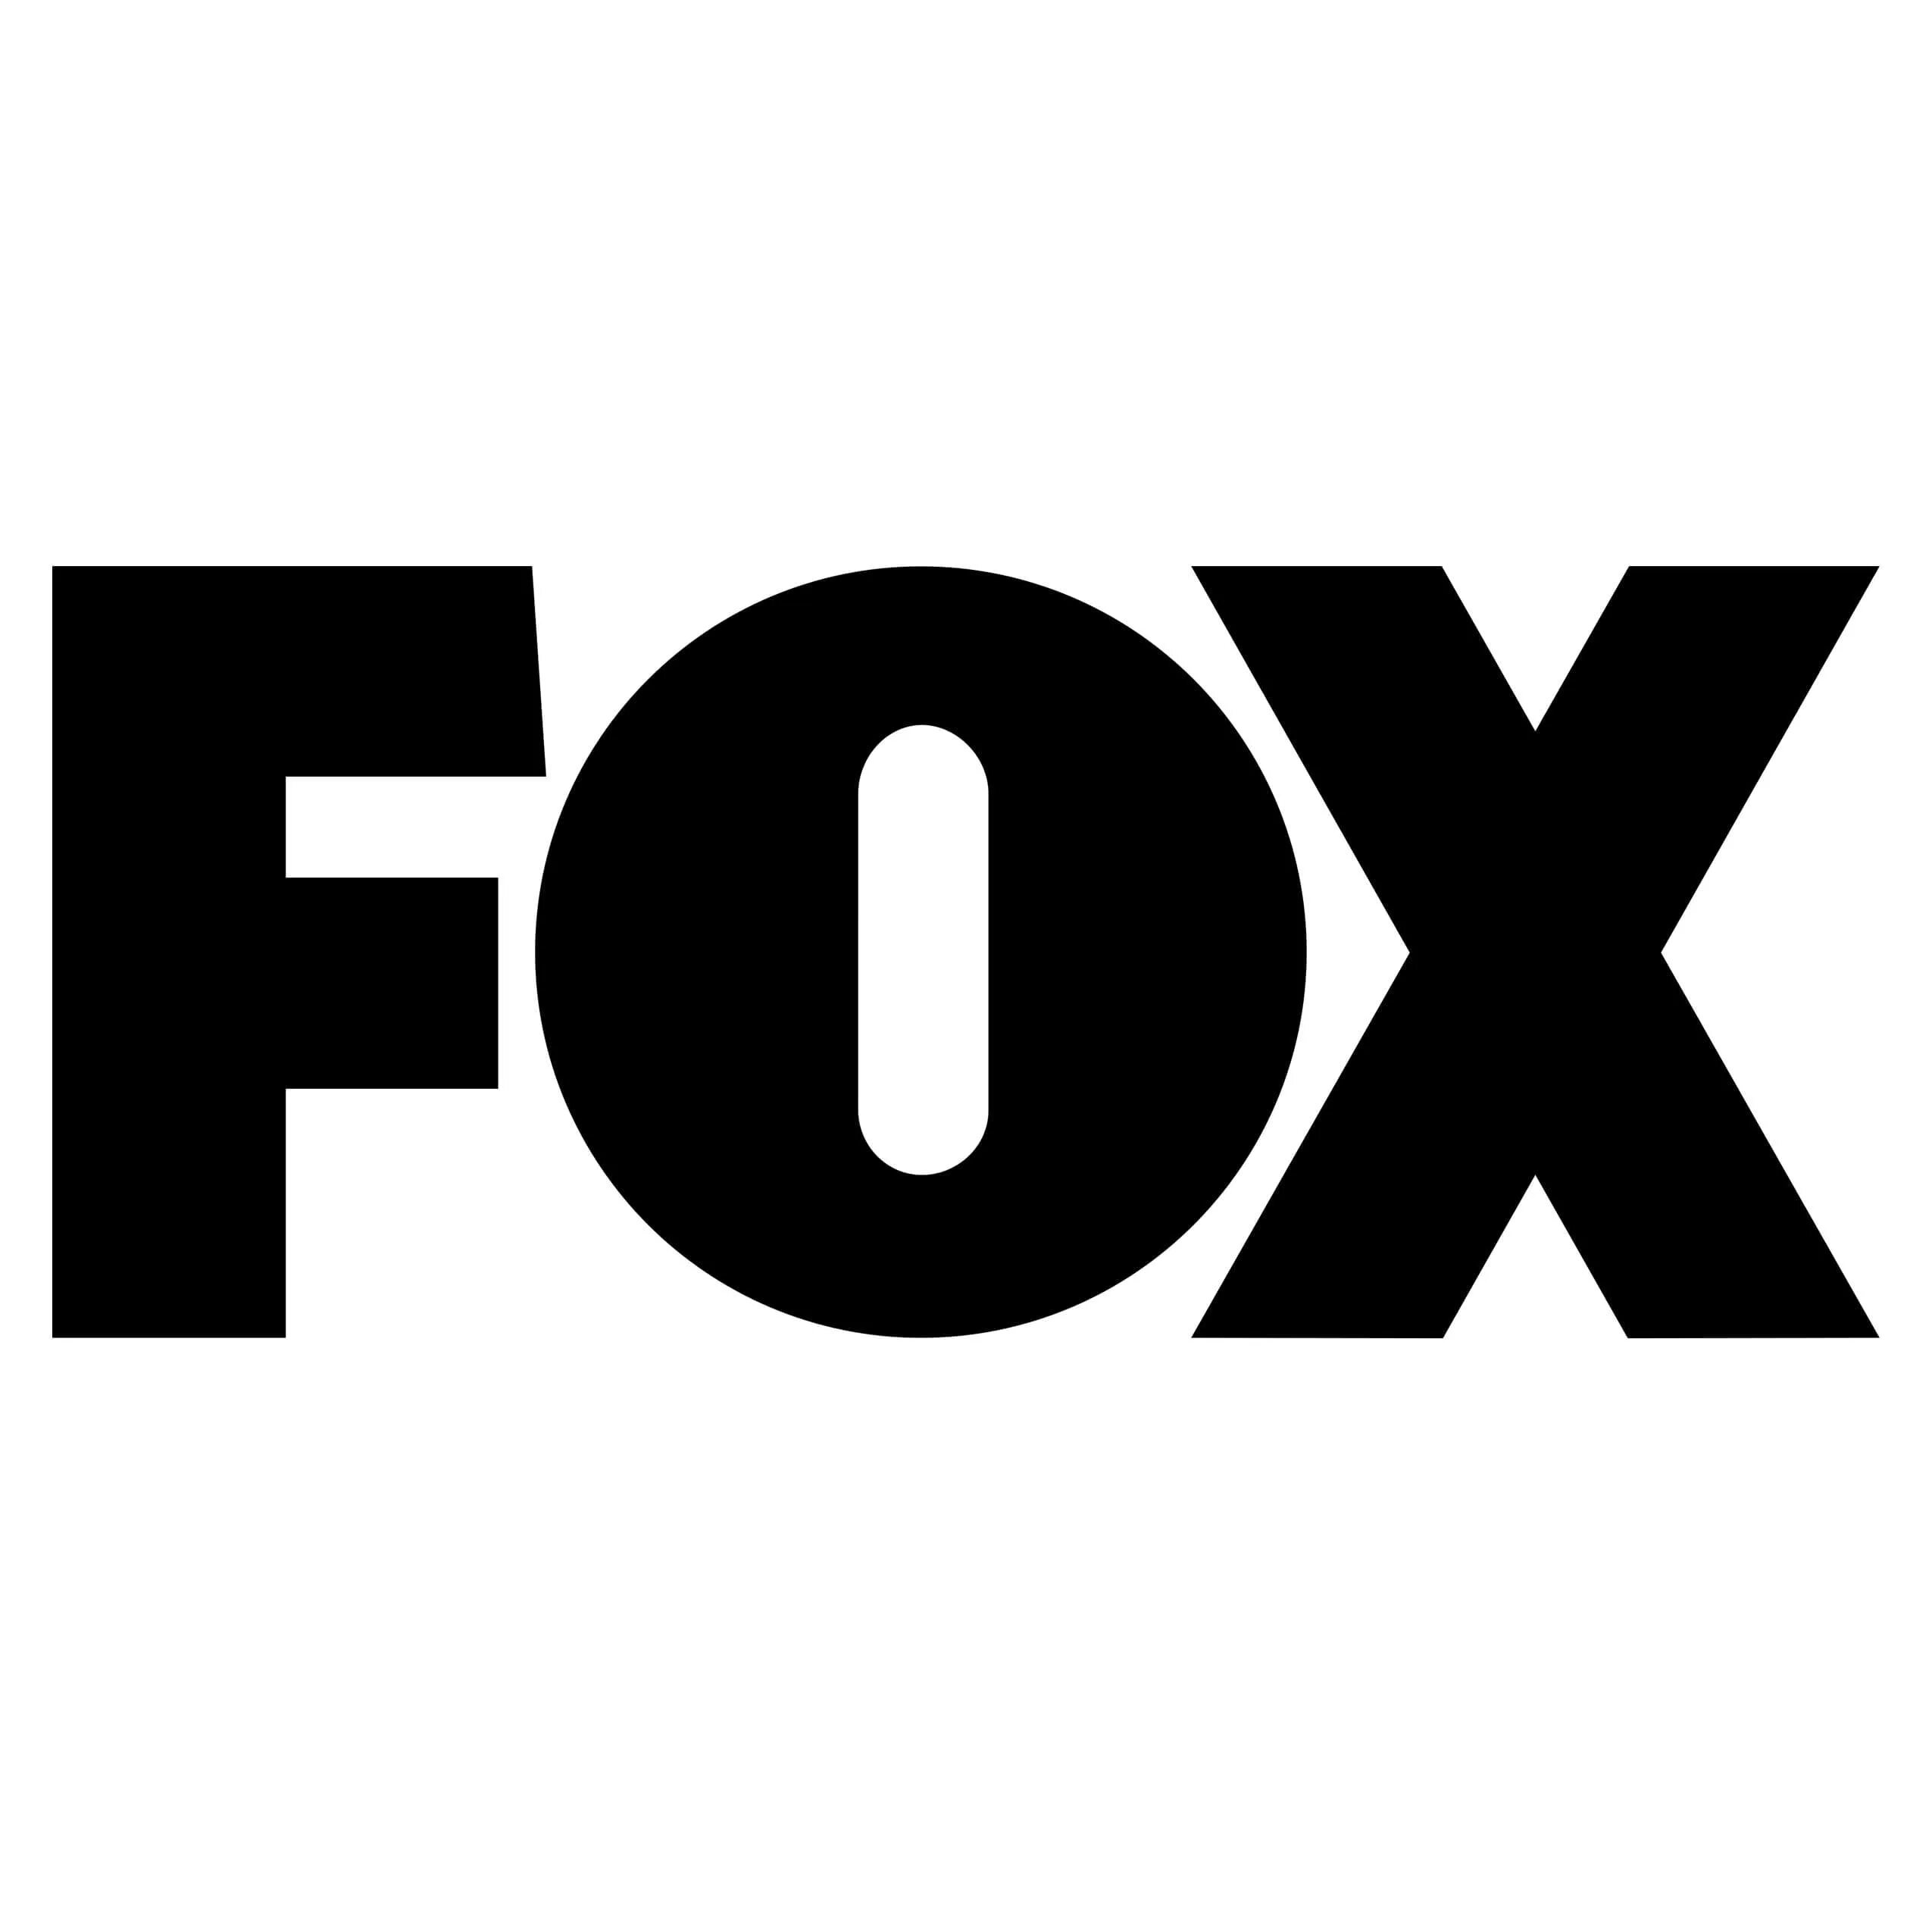 Кане Фокс. Fox Broadcasting Company. Fox TV logo. Телеканал Fox HD логотип. Broadcasting company